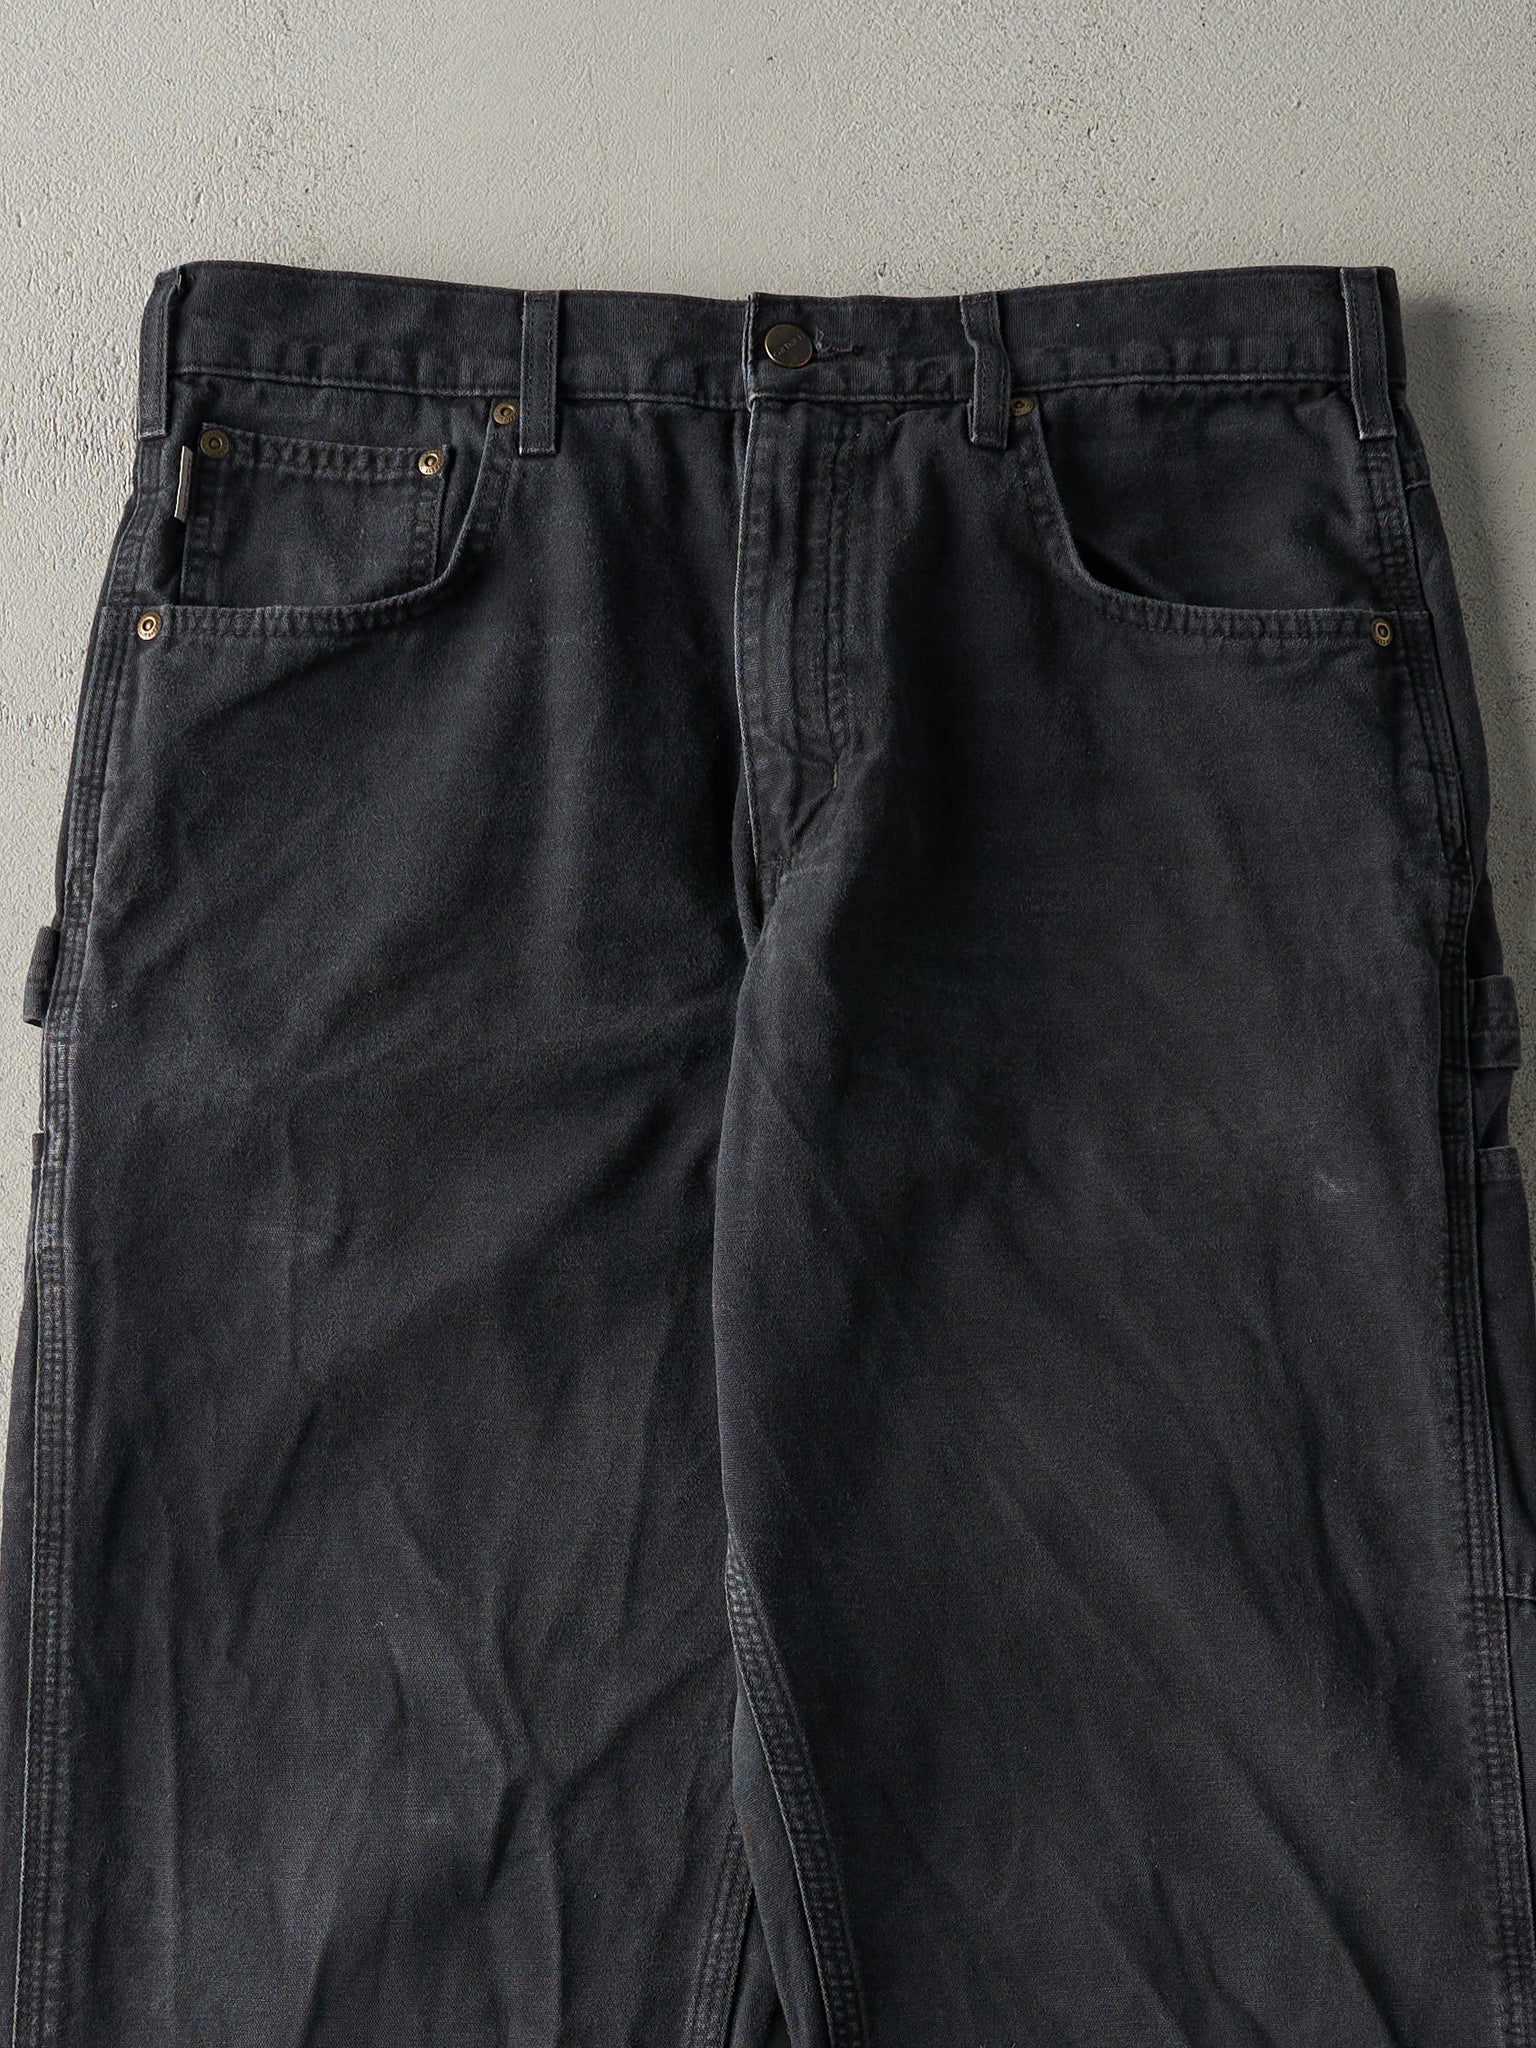 Vintage Y2K Faded Black Loose Fit Carhartt Lightweight Carpenter Pants (34x28.5)